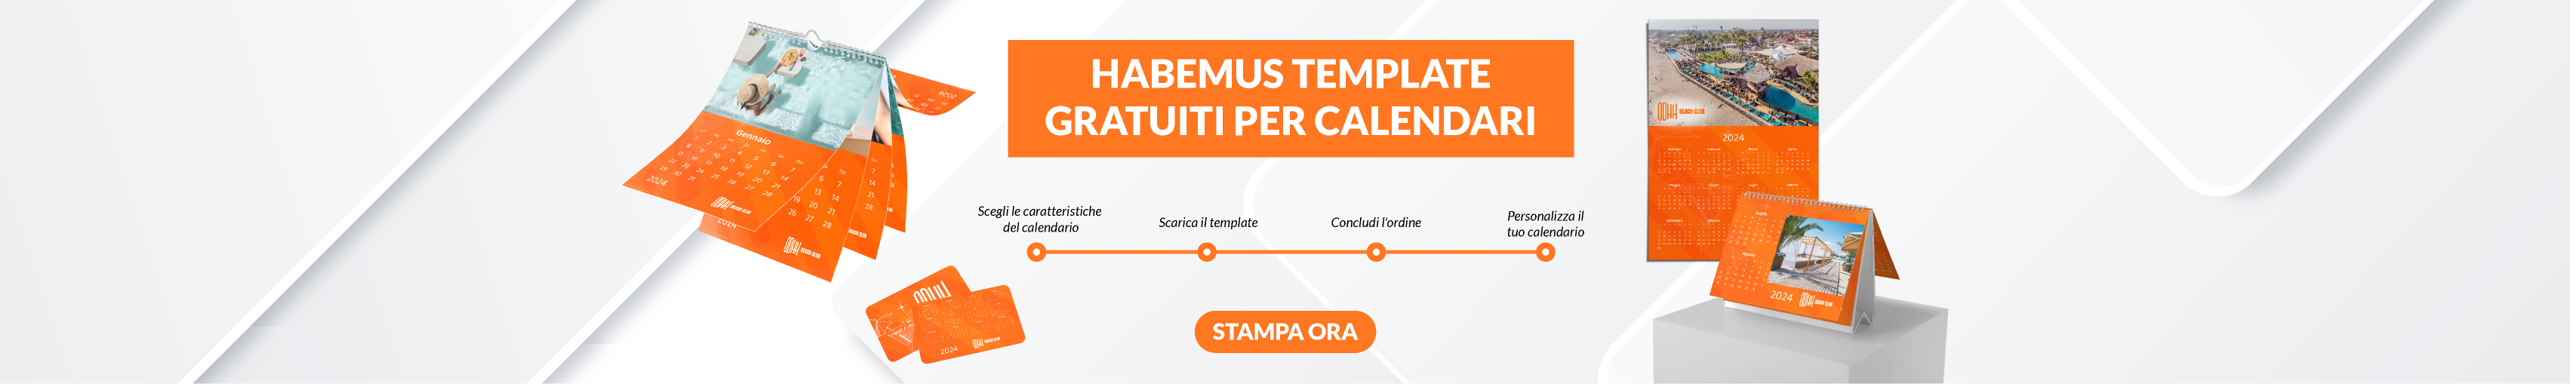 Homepage B - Template calendari